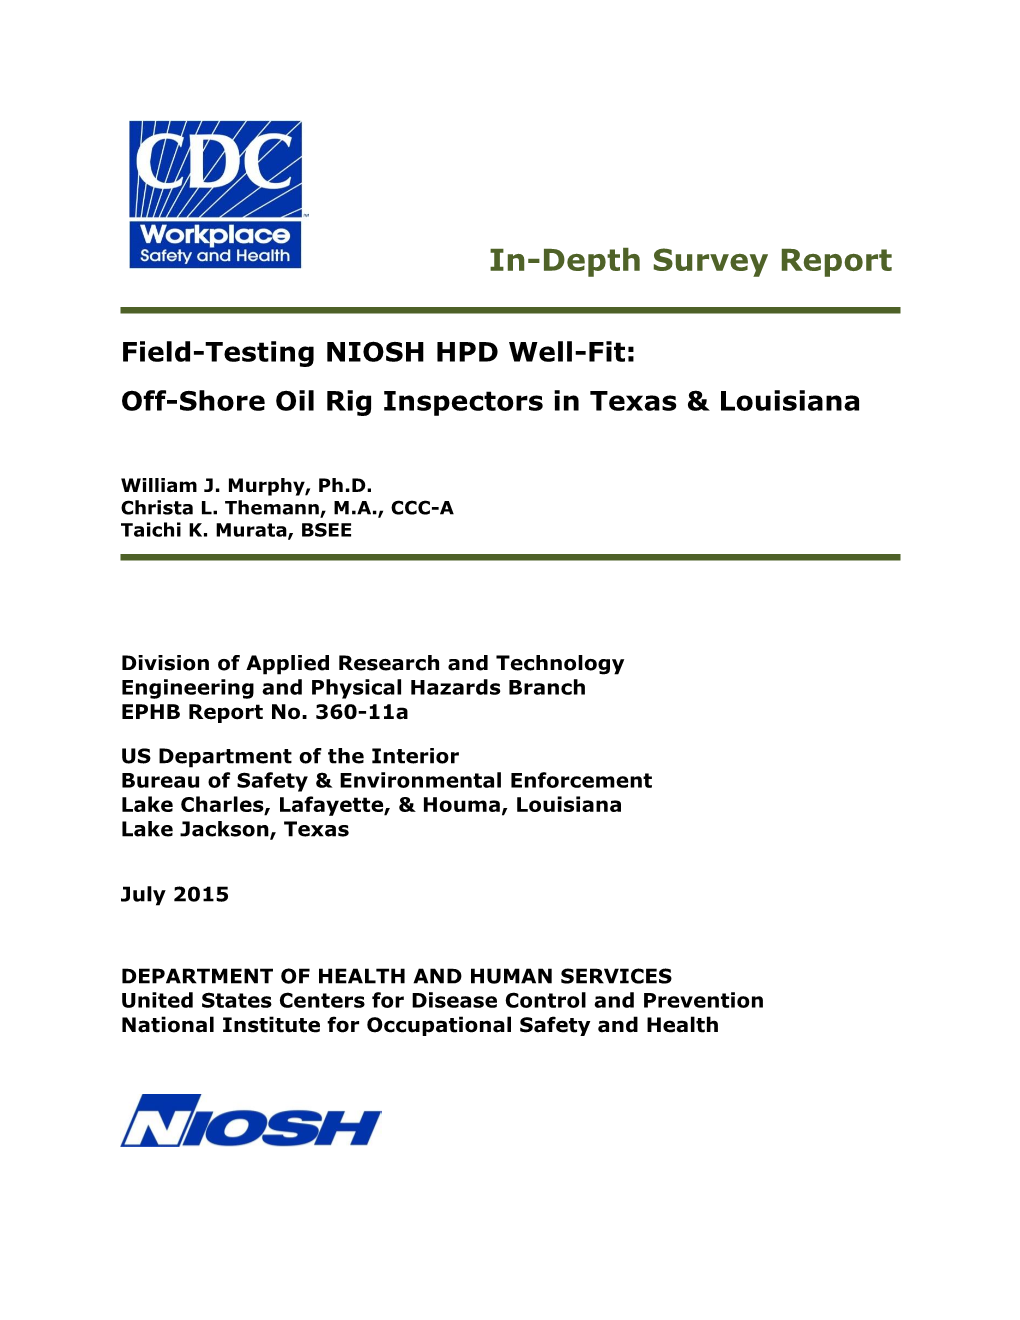 Field-Testing NIOSH HPD Well-Fit: Off-Shore Oil Rig Inspectors in Texas & Louisiana